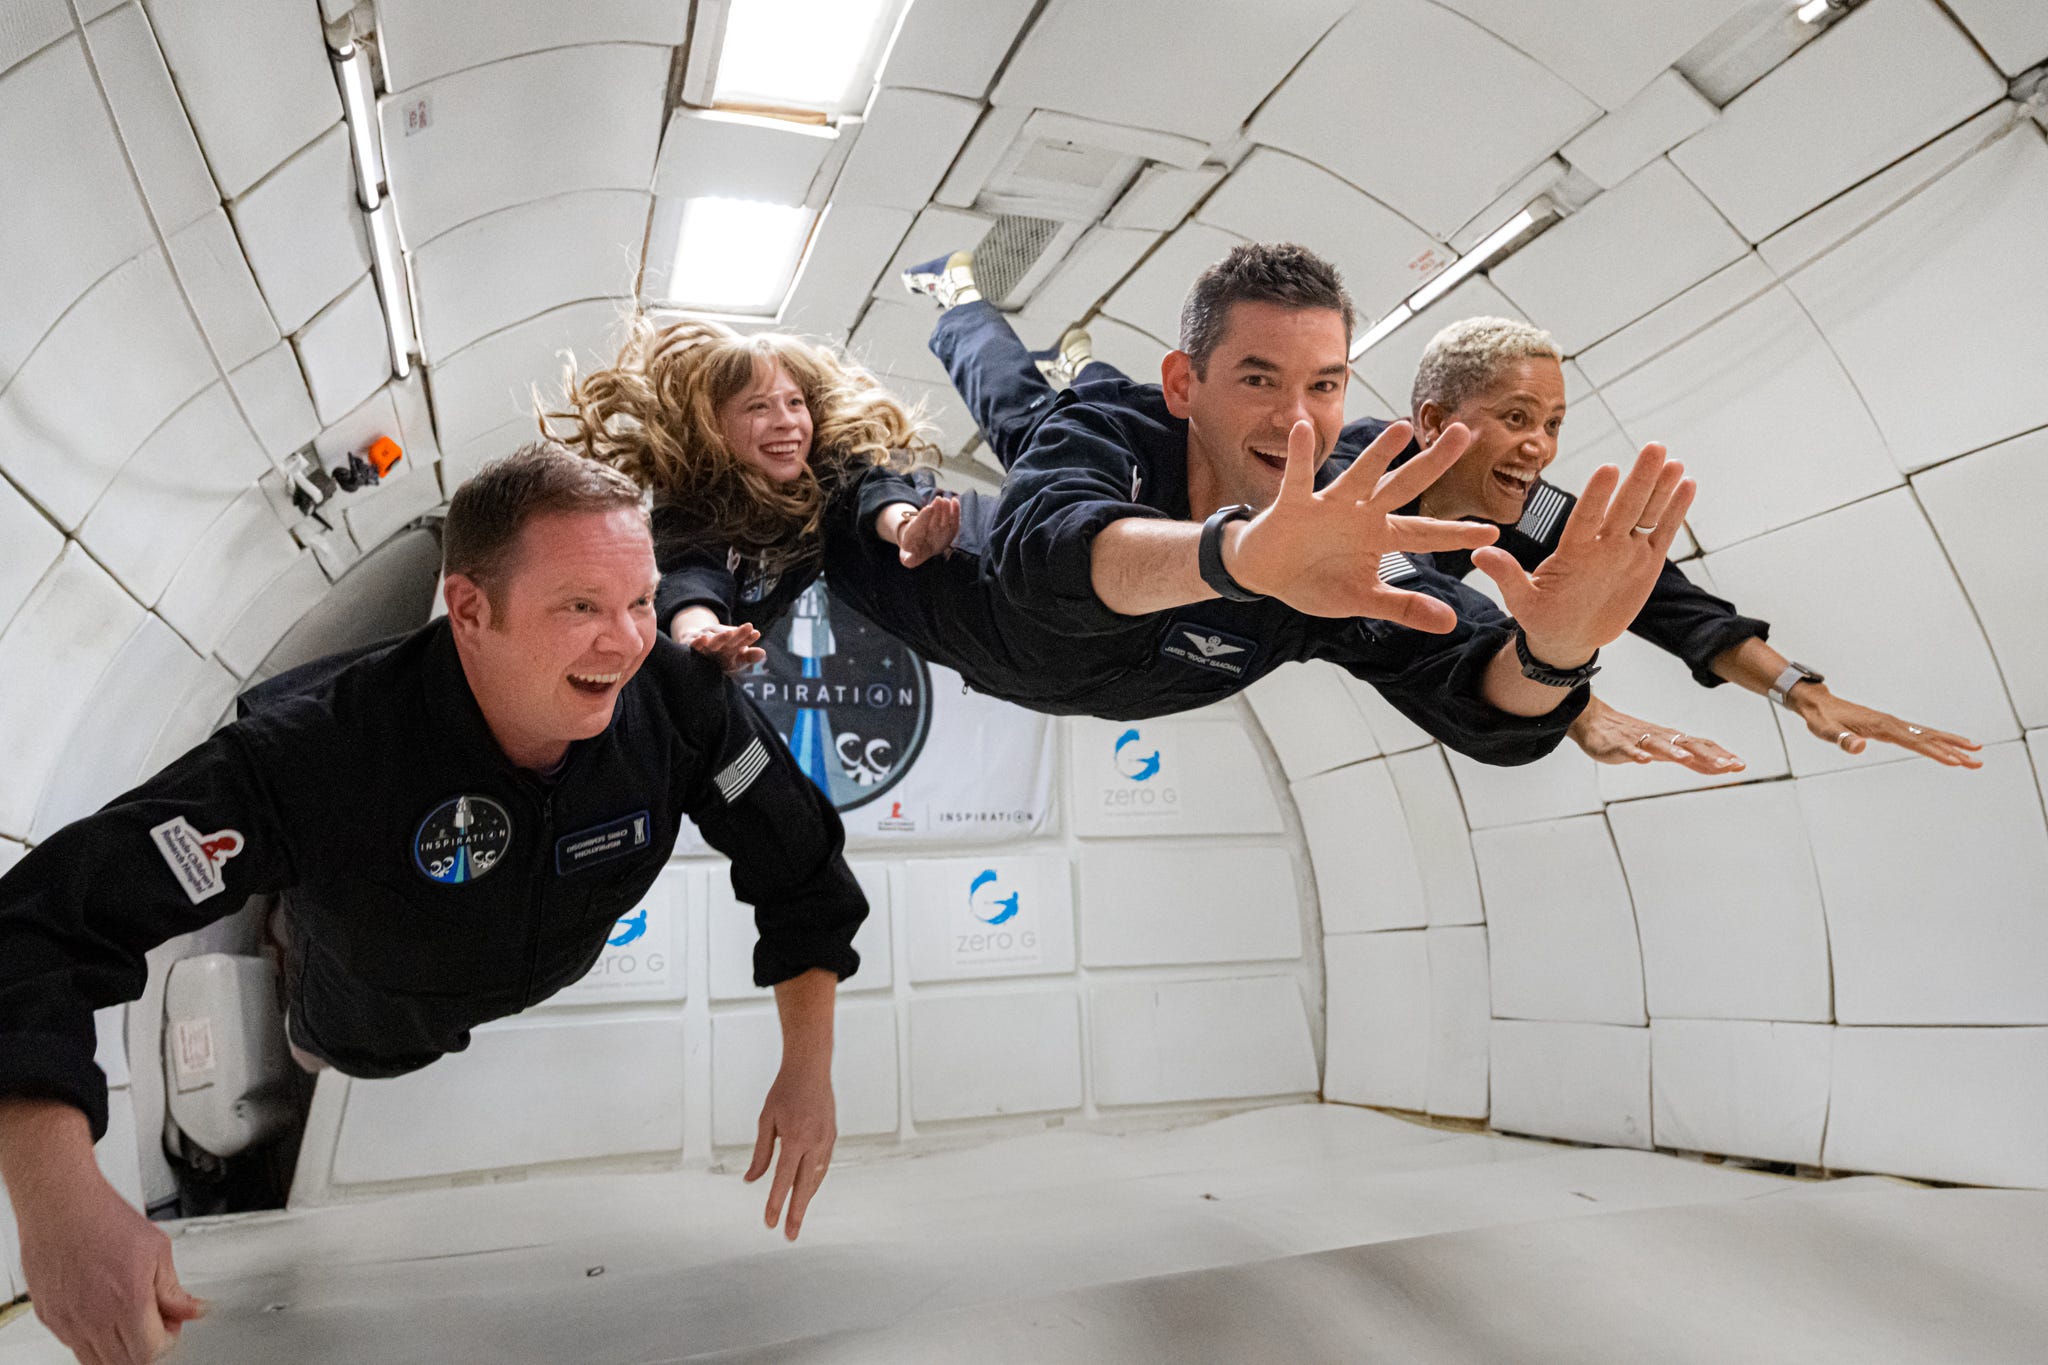 inspiration4 crew members screaming joy floating weightless inside plane